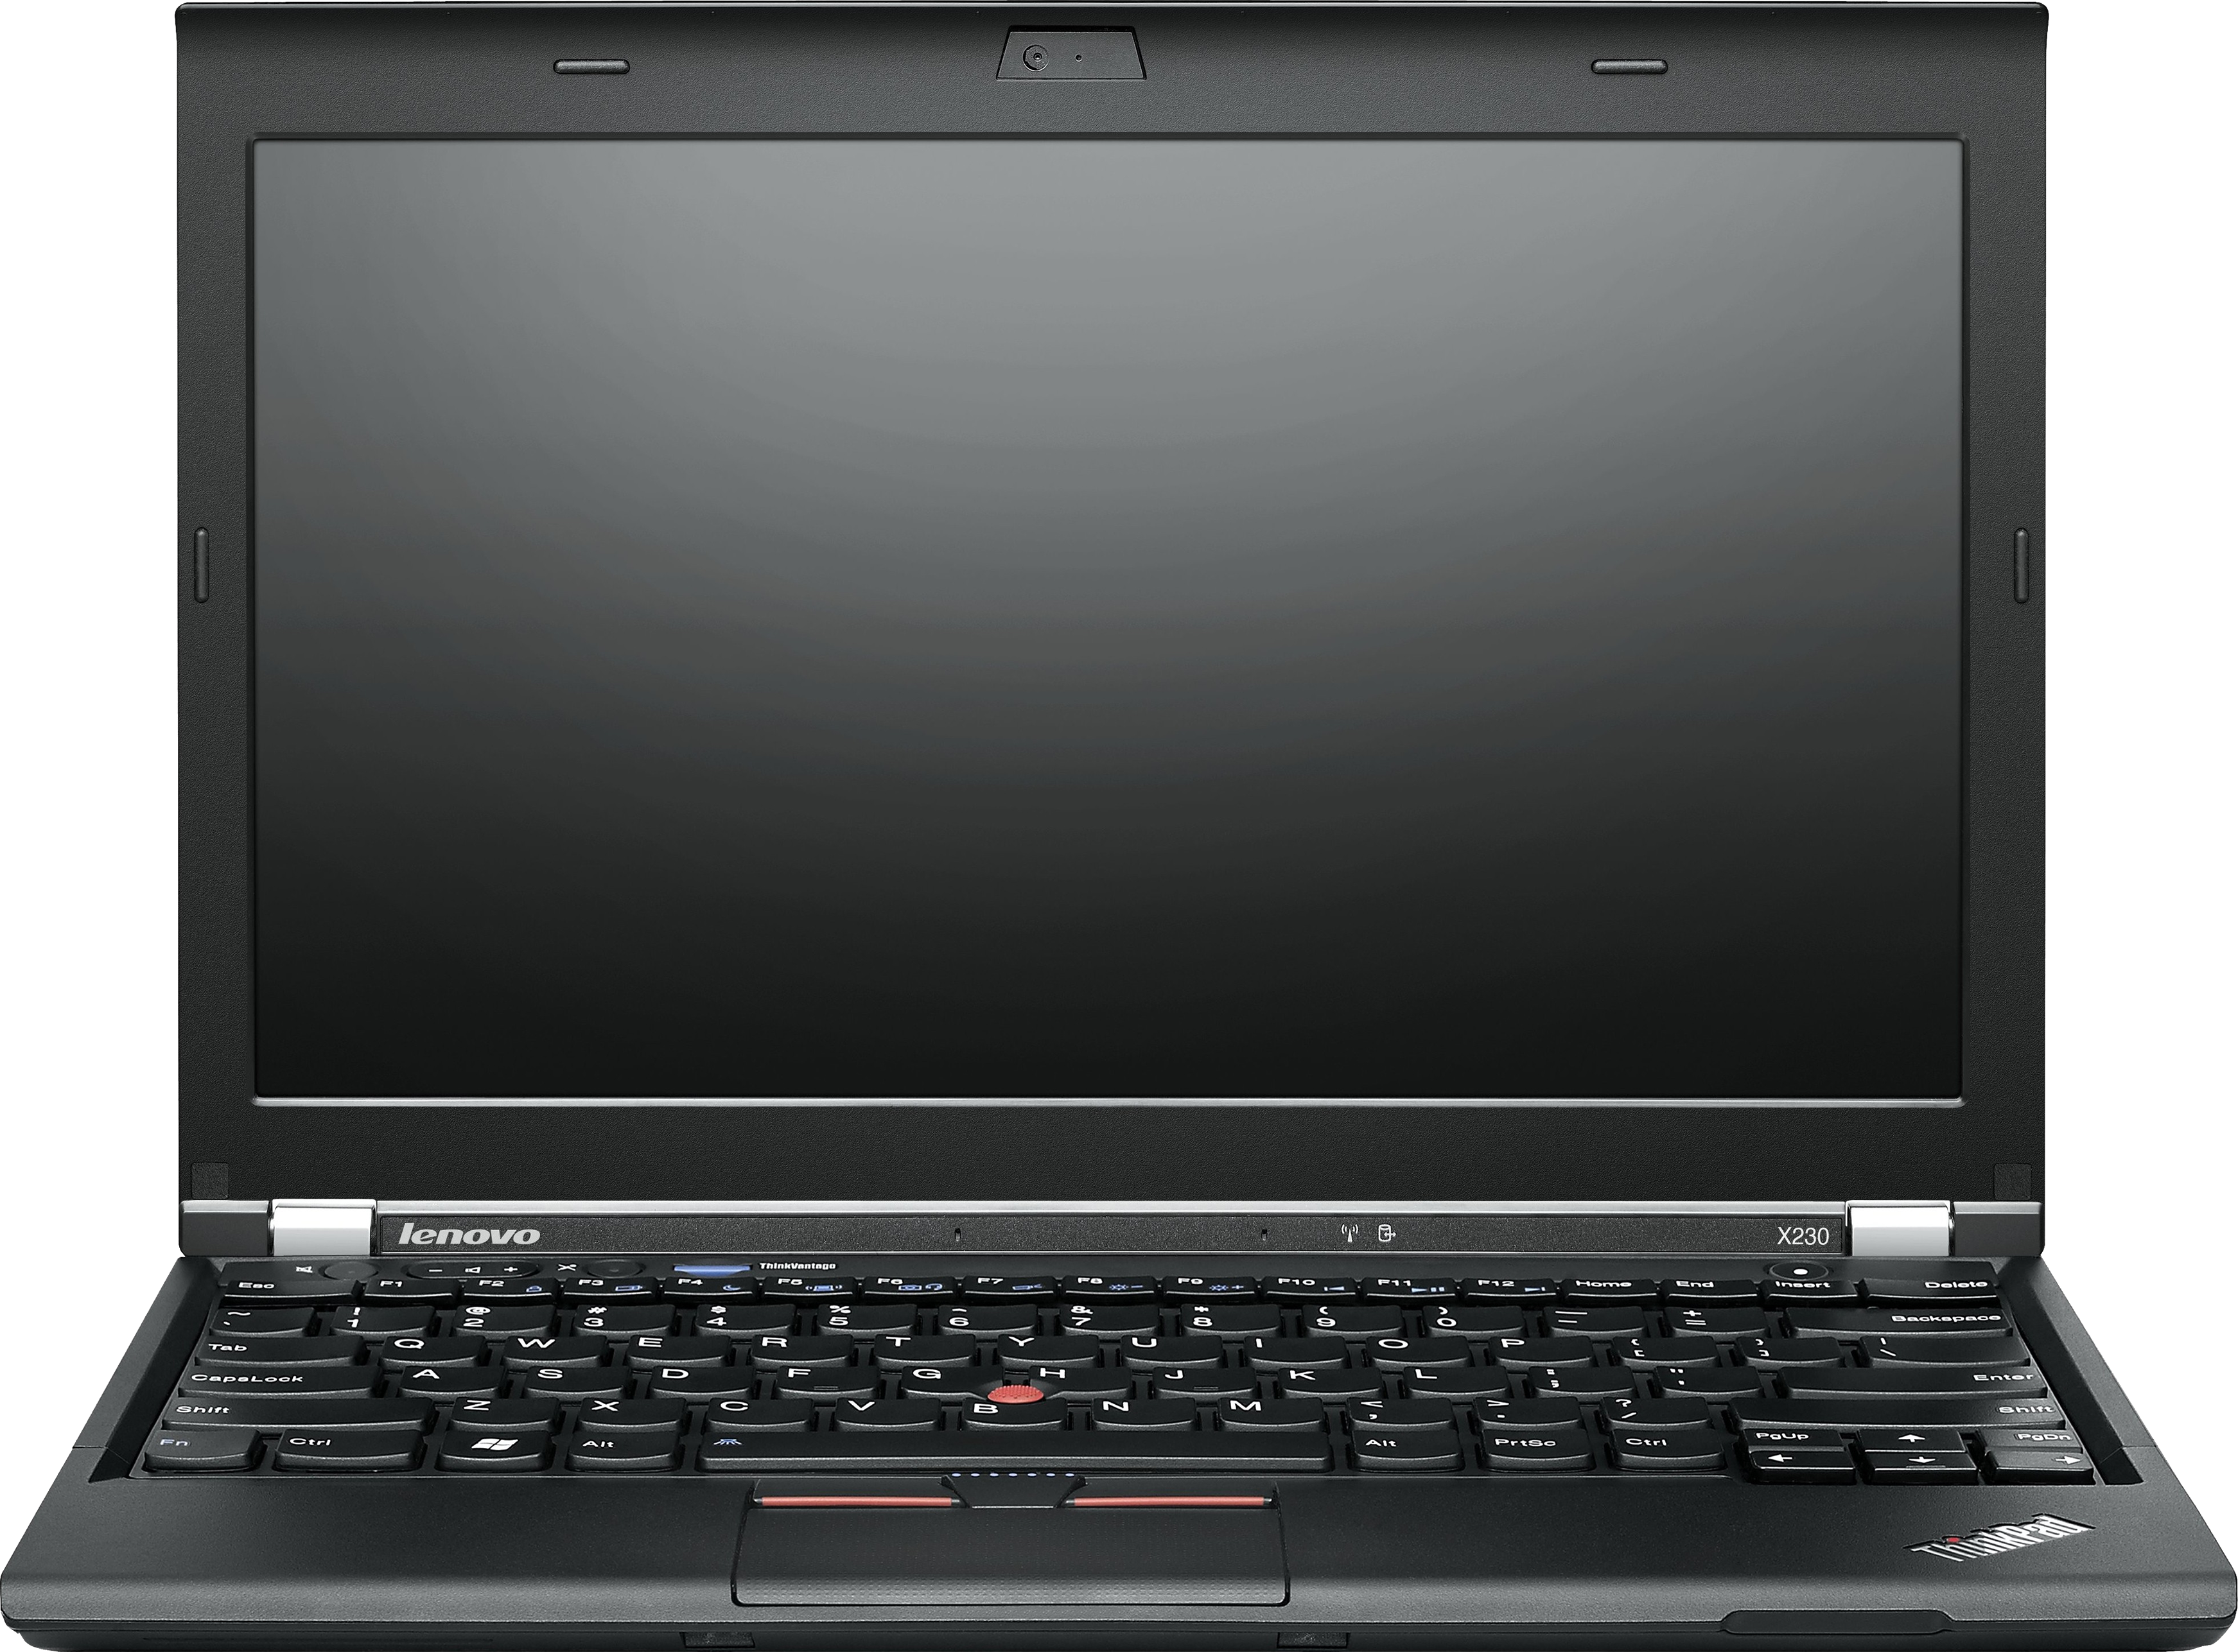 Laptop Notebook Png Image - Laptop, Transparent background PNG HD thumbnail